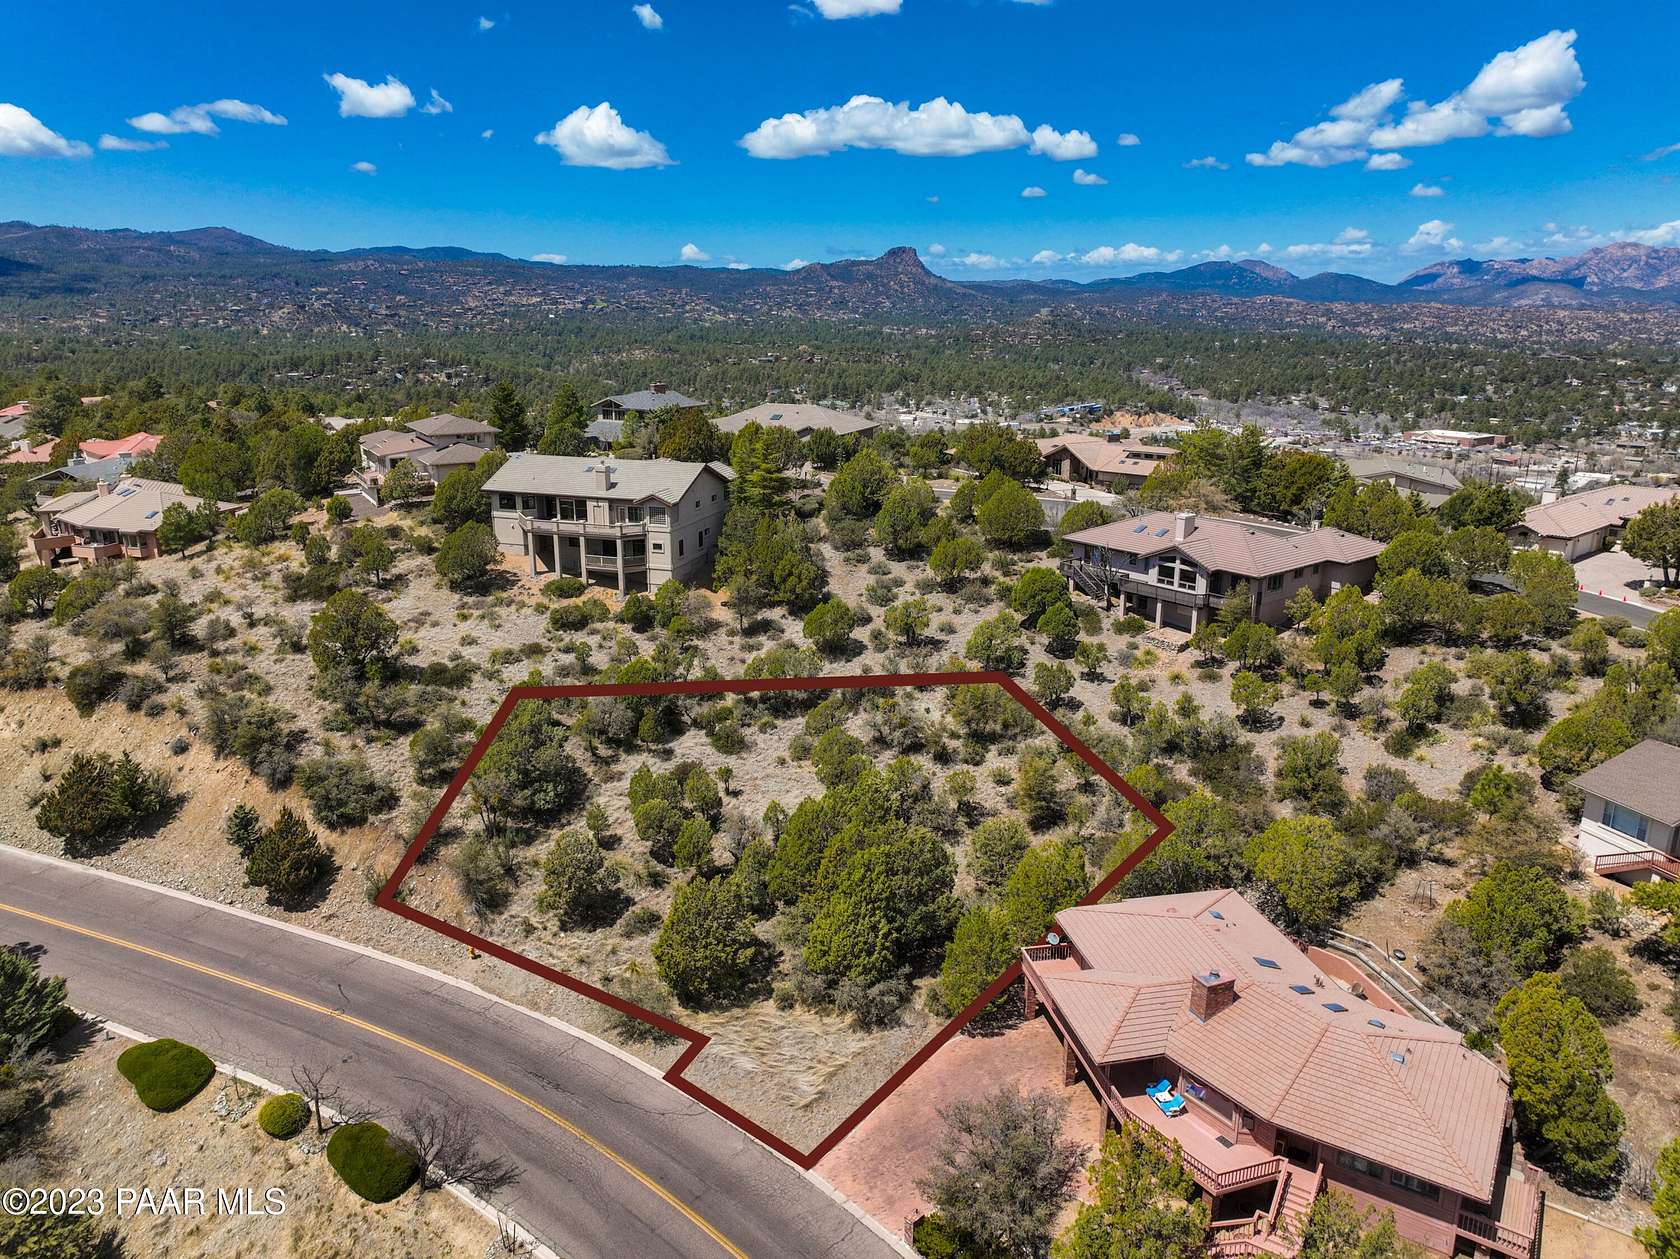 0.24 Acres of Residential Land for Sale in Prescott, Arizona